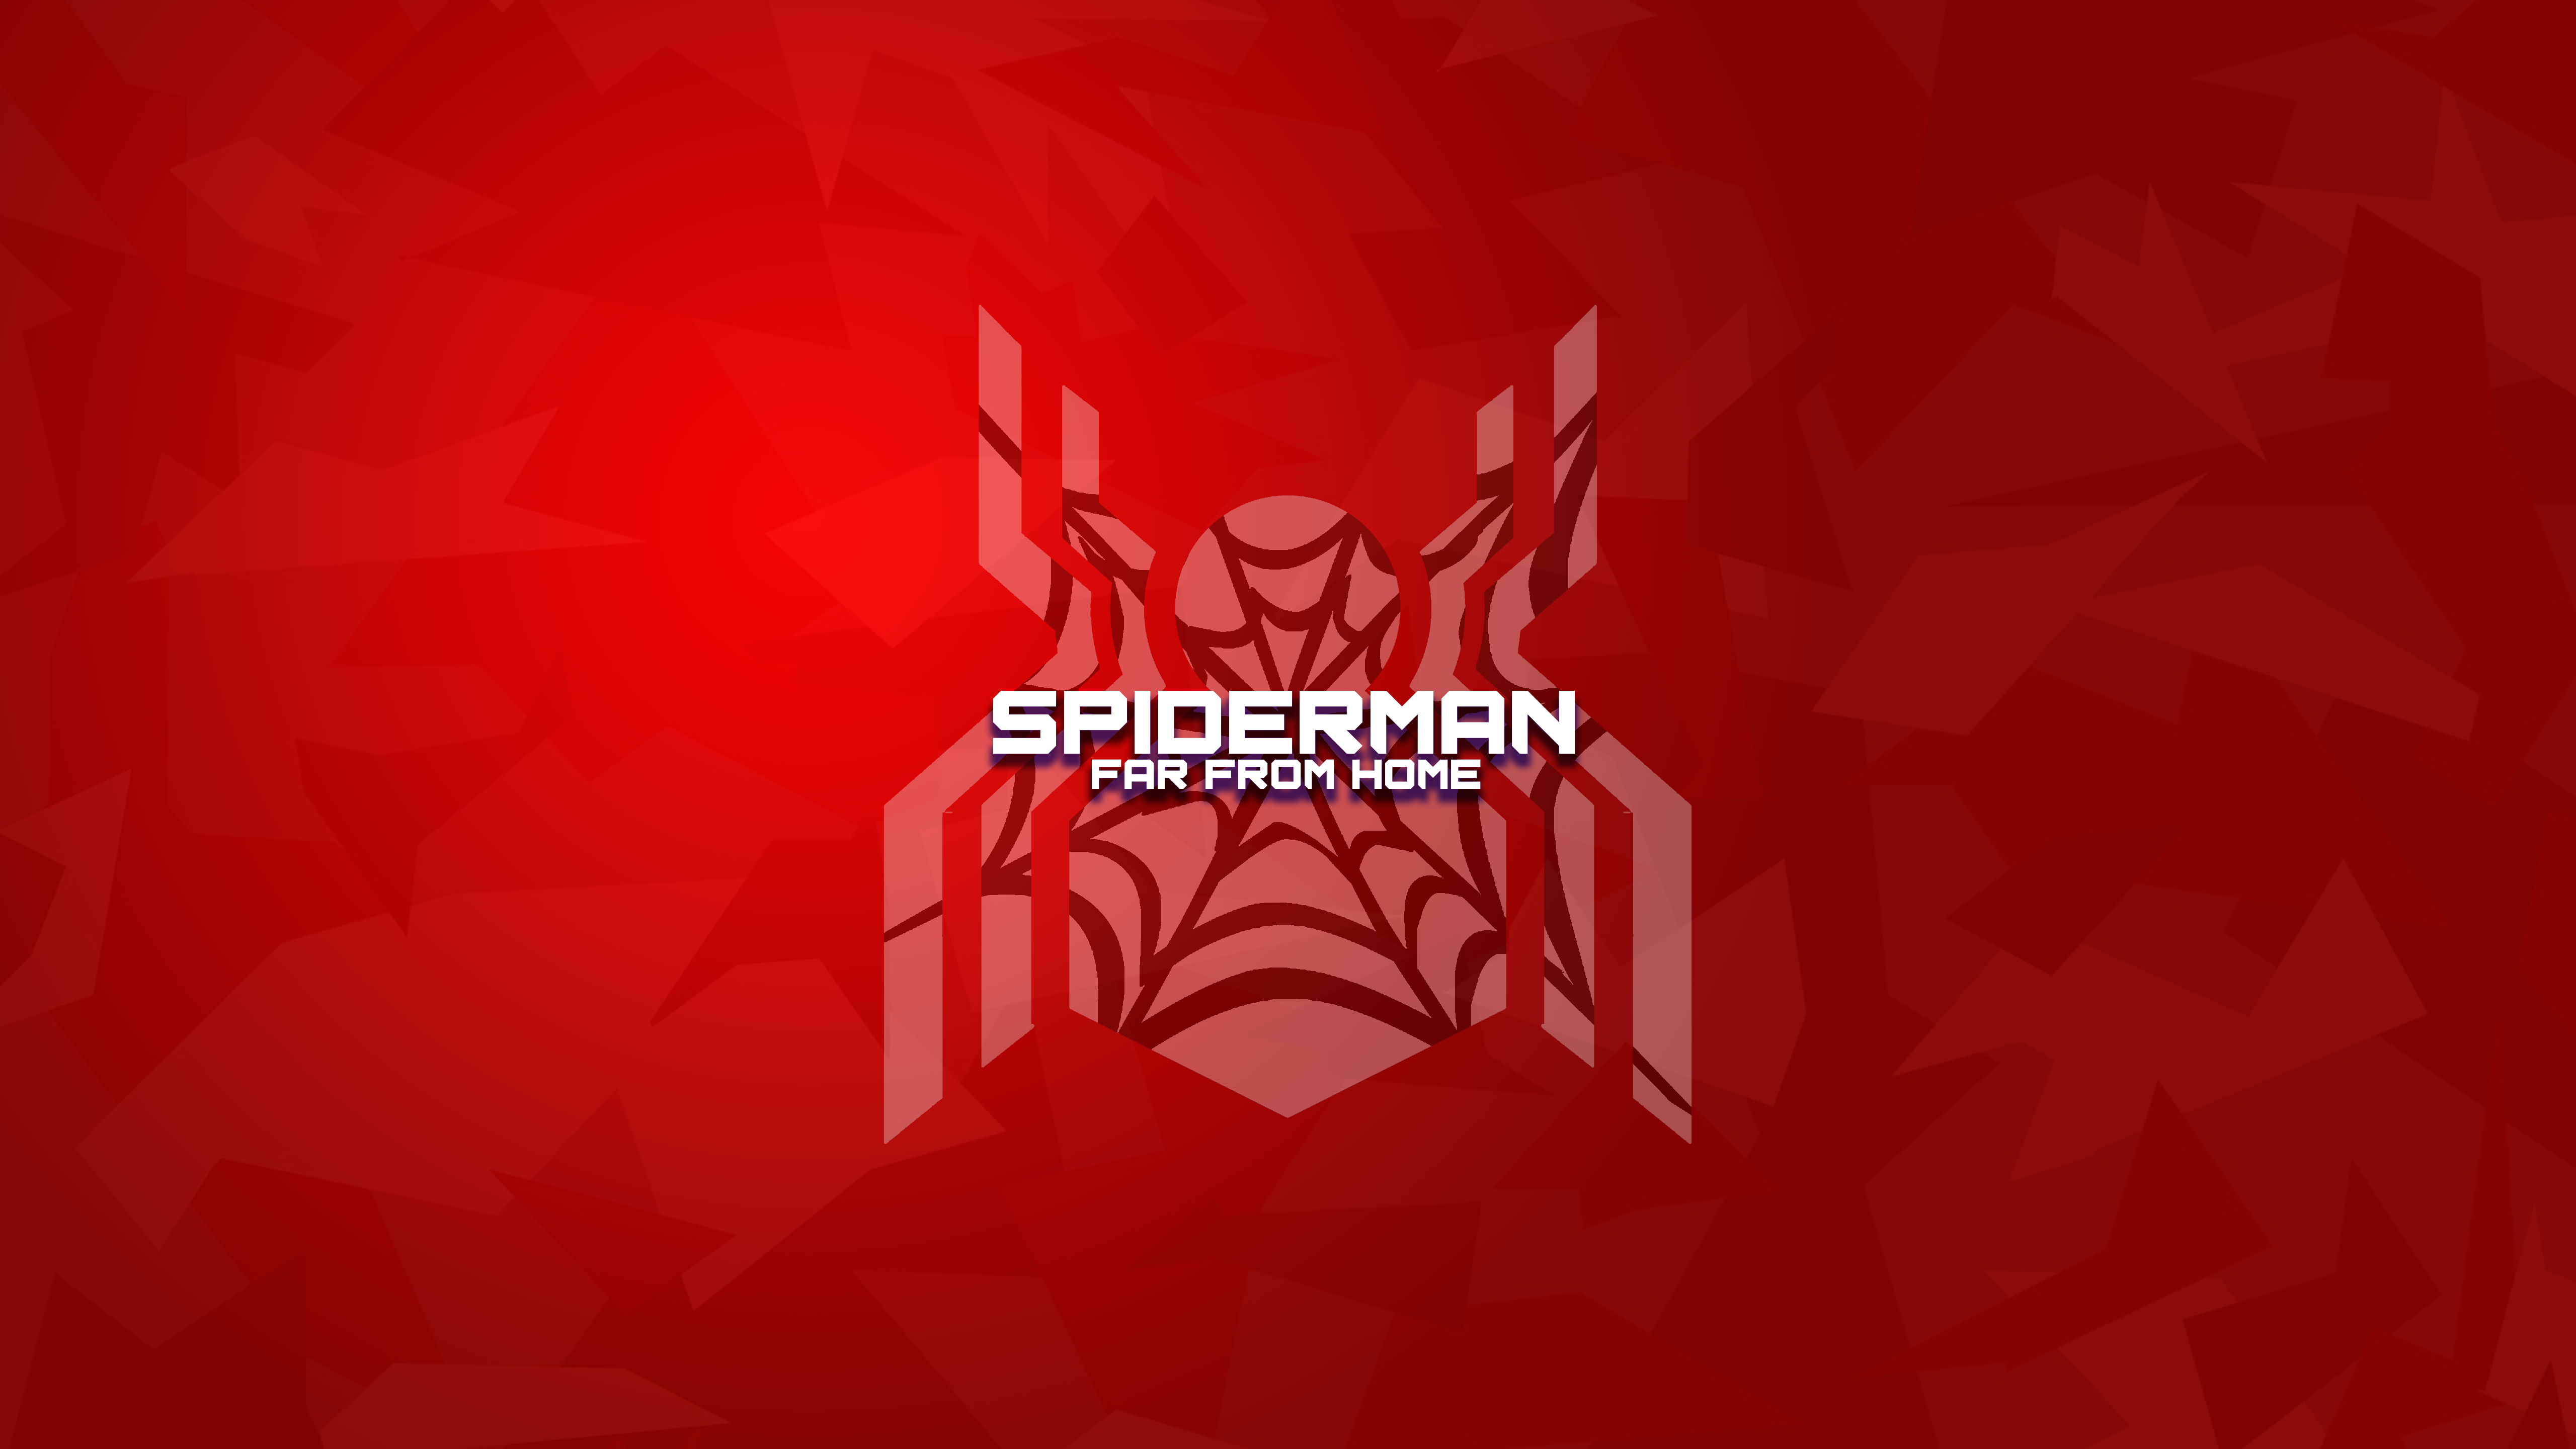 Hd Wallpaper Spiderman Far From Home - HD Wallpaper 